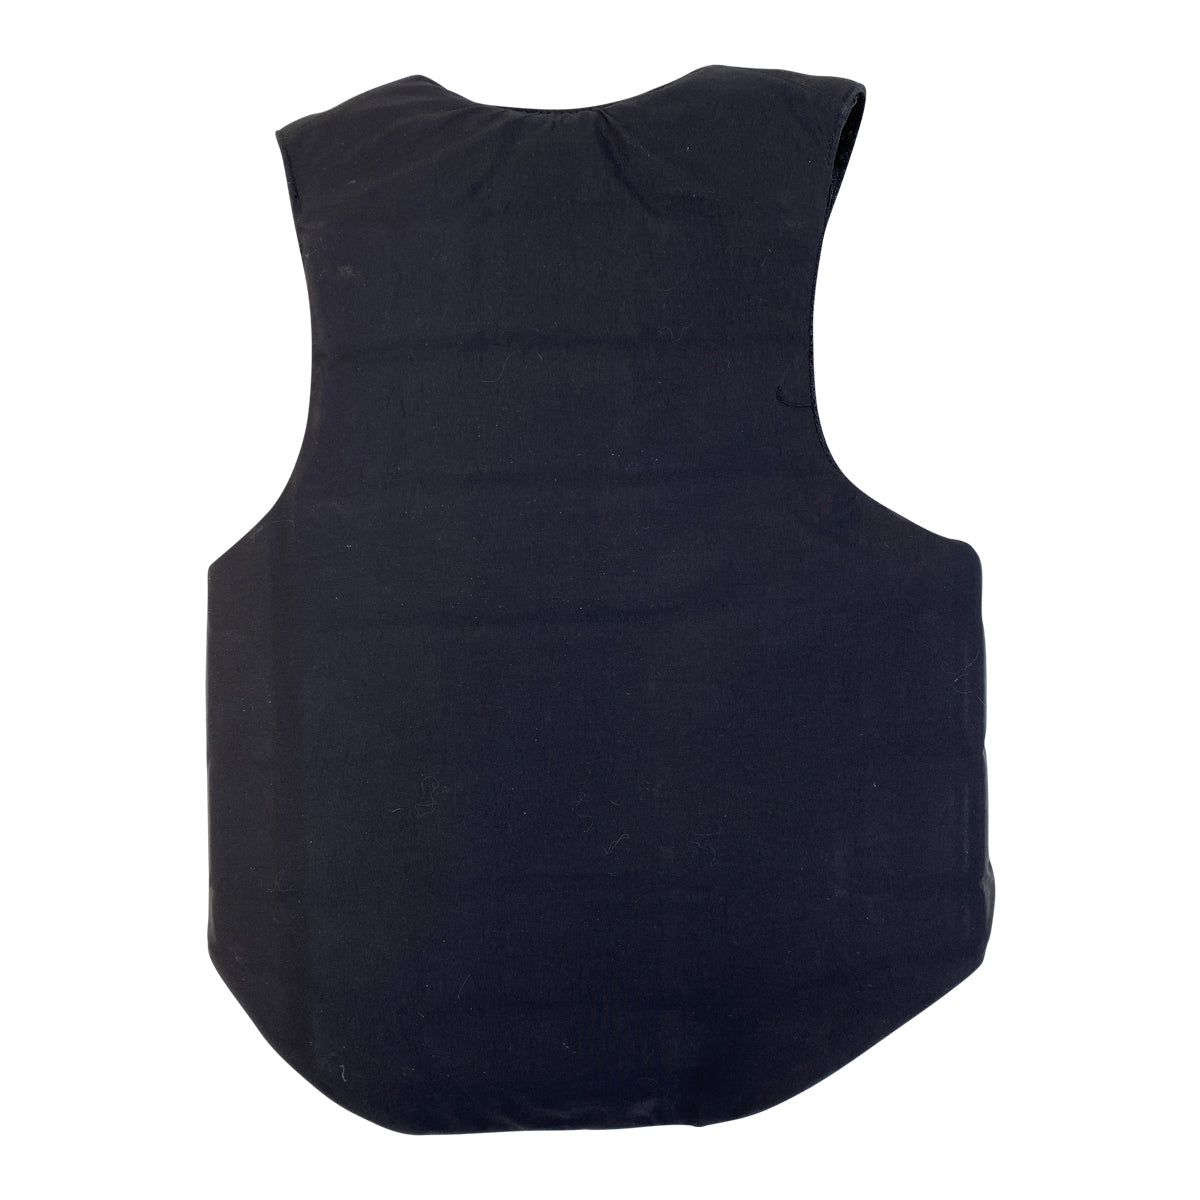 Tipperary Ride-Lite Adult Vest in Black